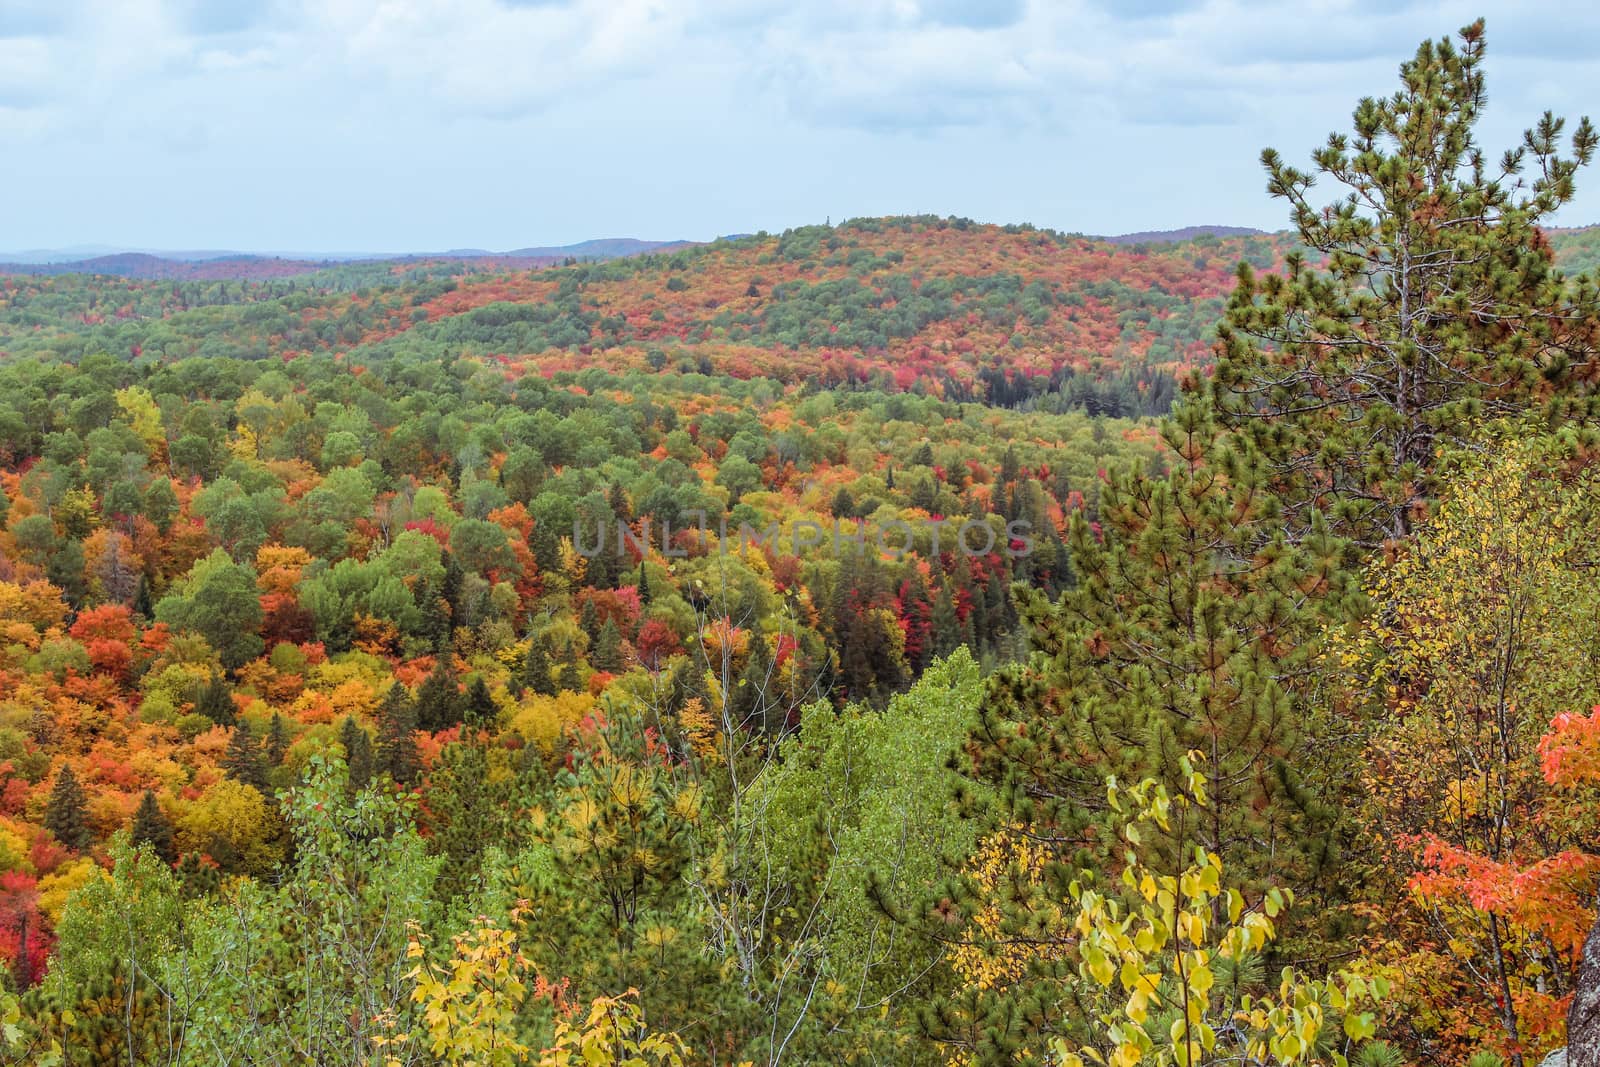 Landscape view of the entire Algonquin National Park during autumn